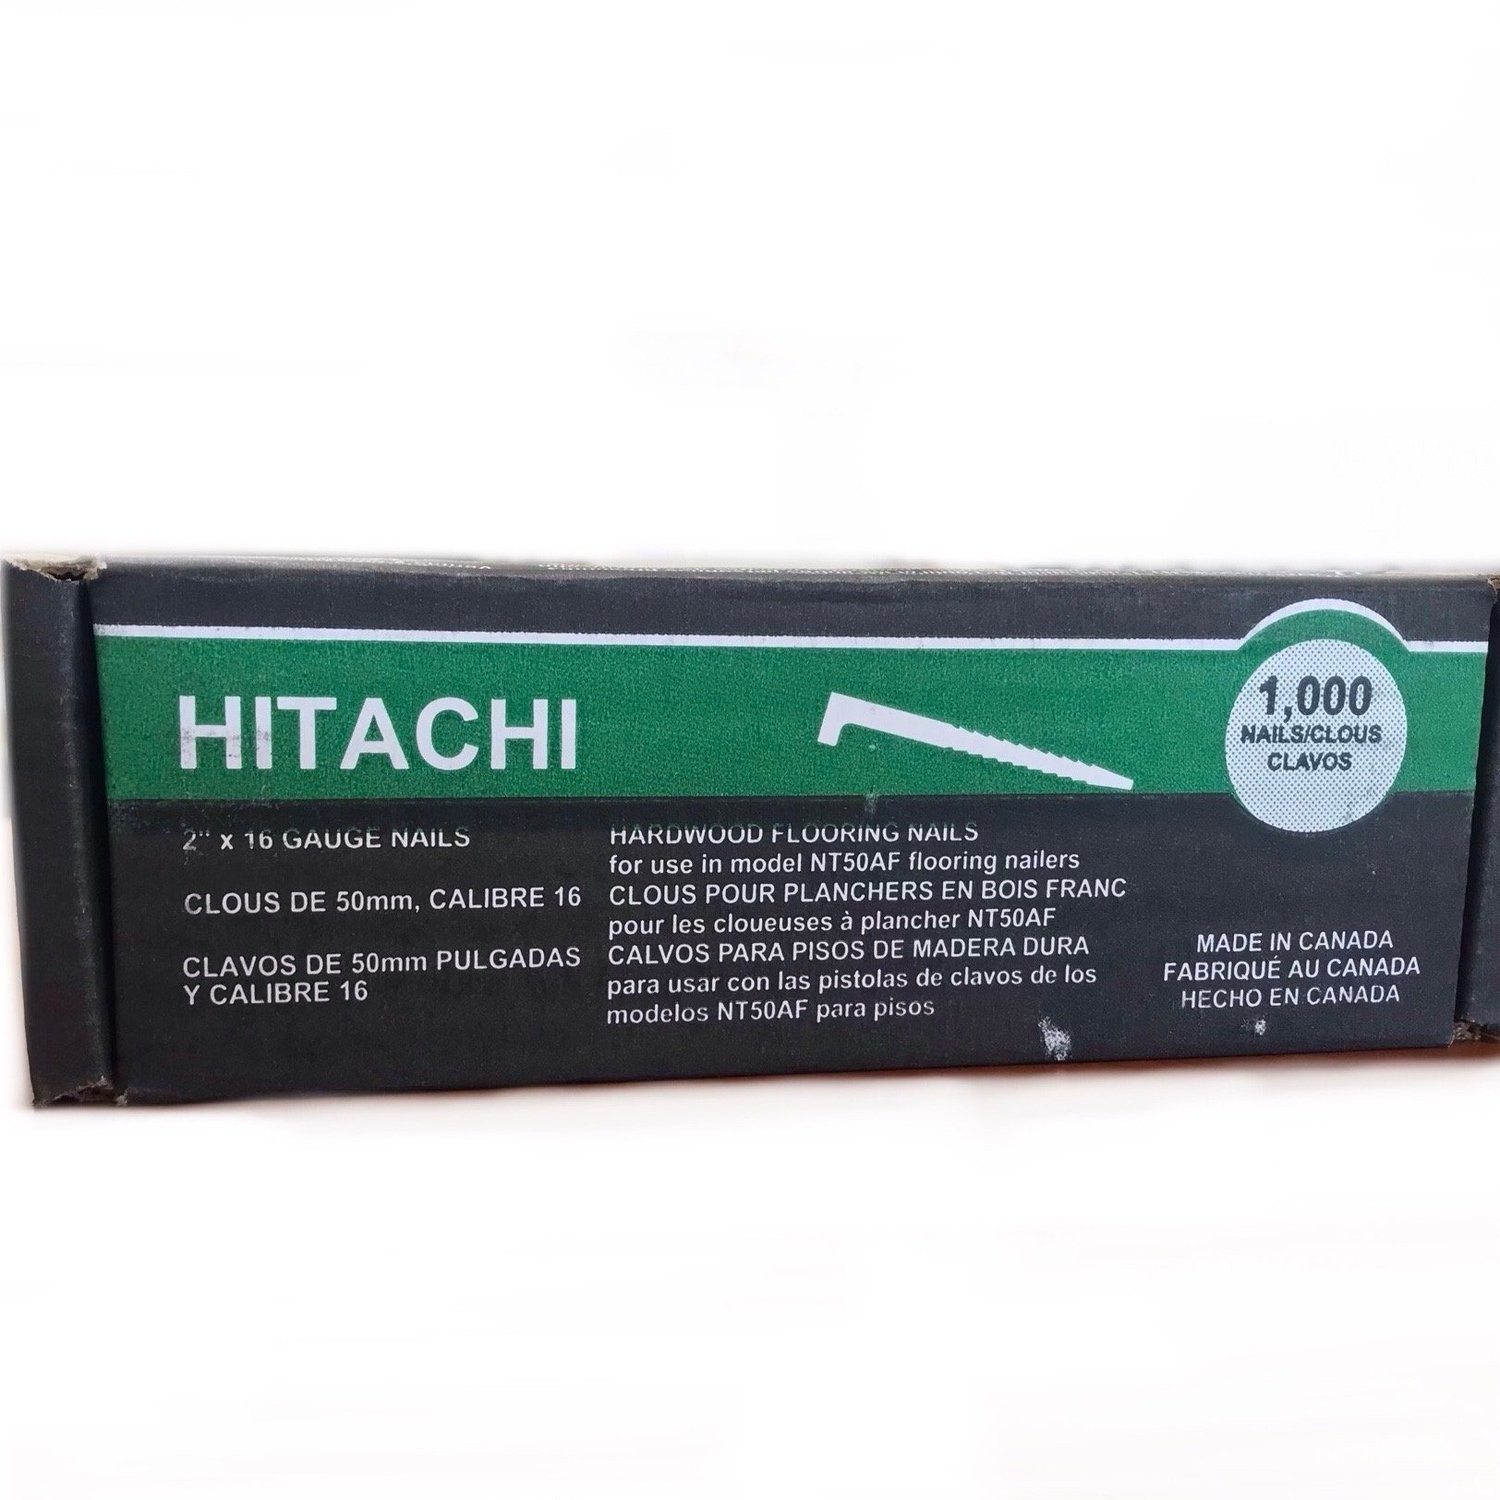 Hitachi 2 X 16 Gauge Hardwood Flooring Nails